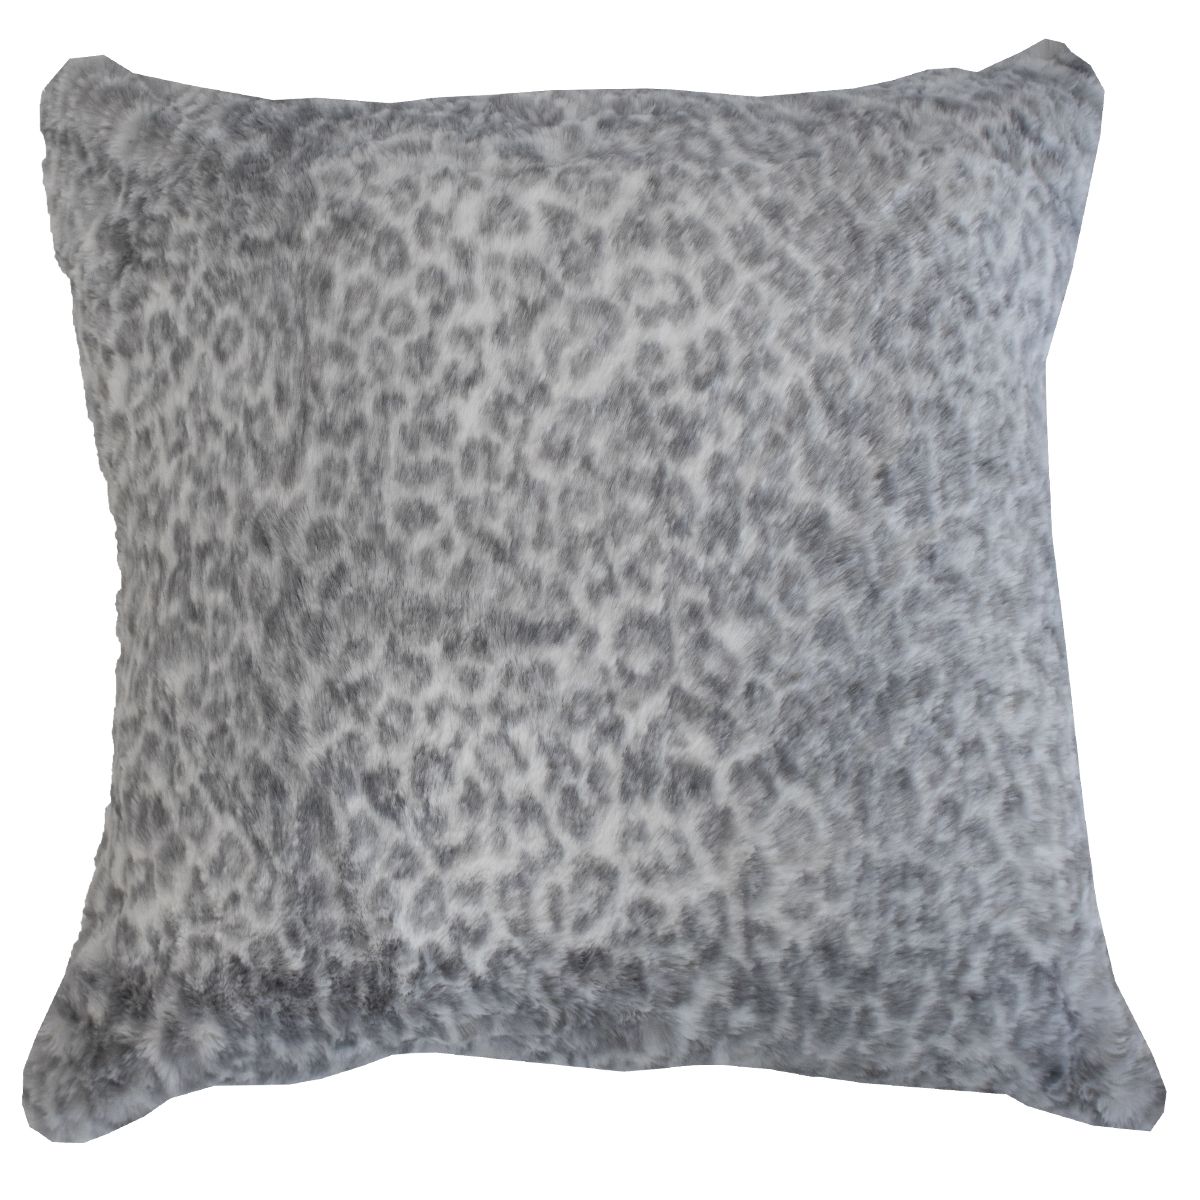 Grey Leopard Faux Fur Cushion, Made in Britain